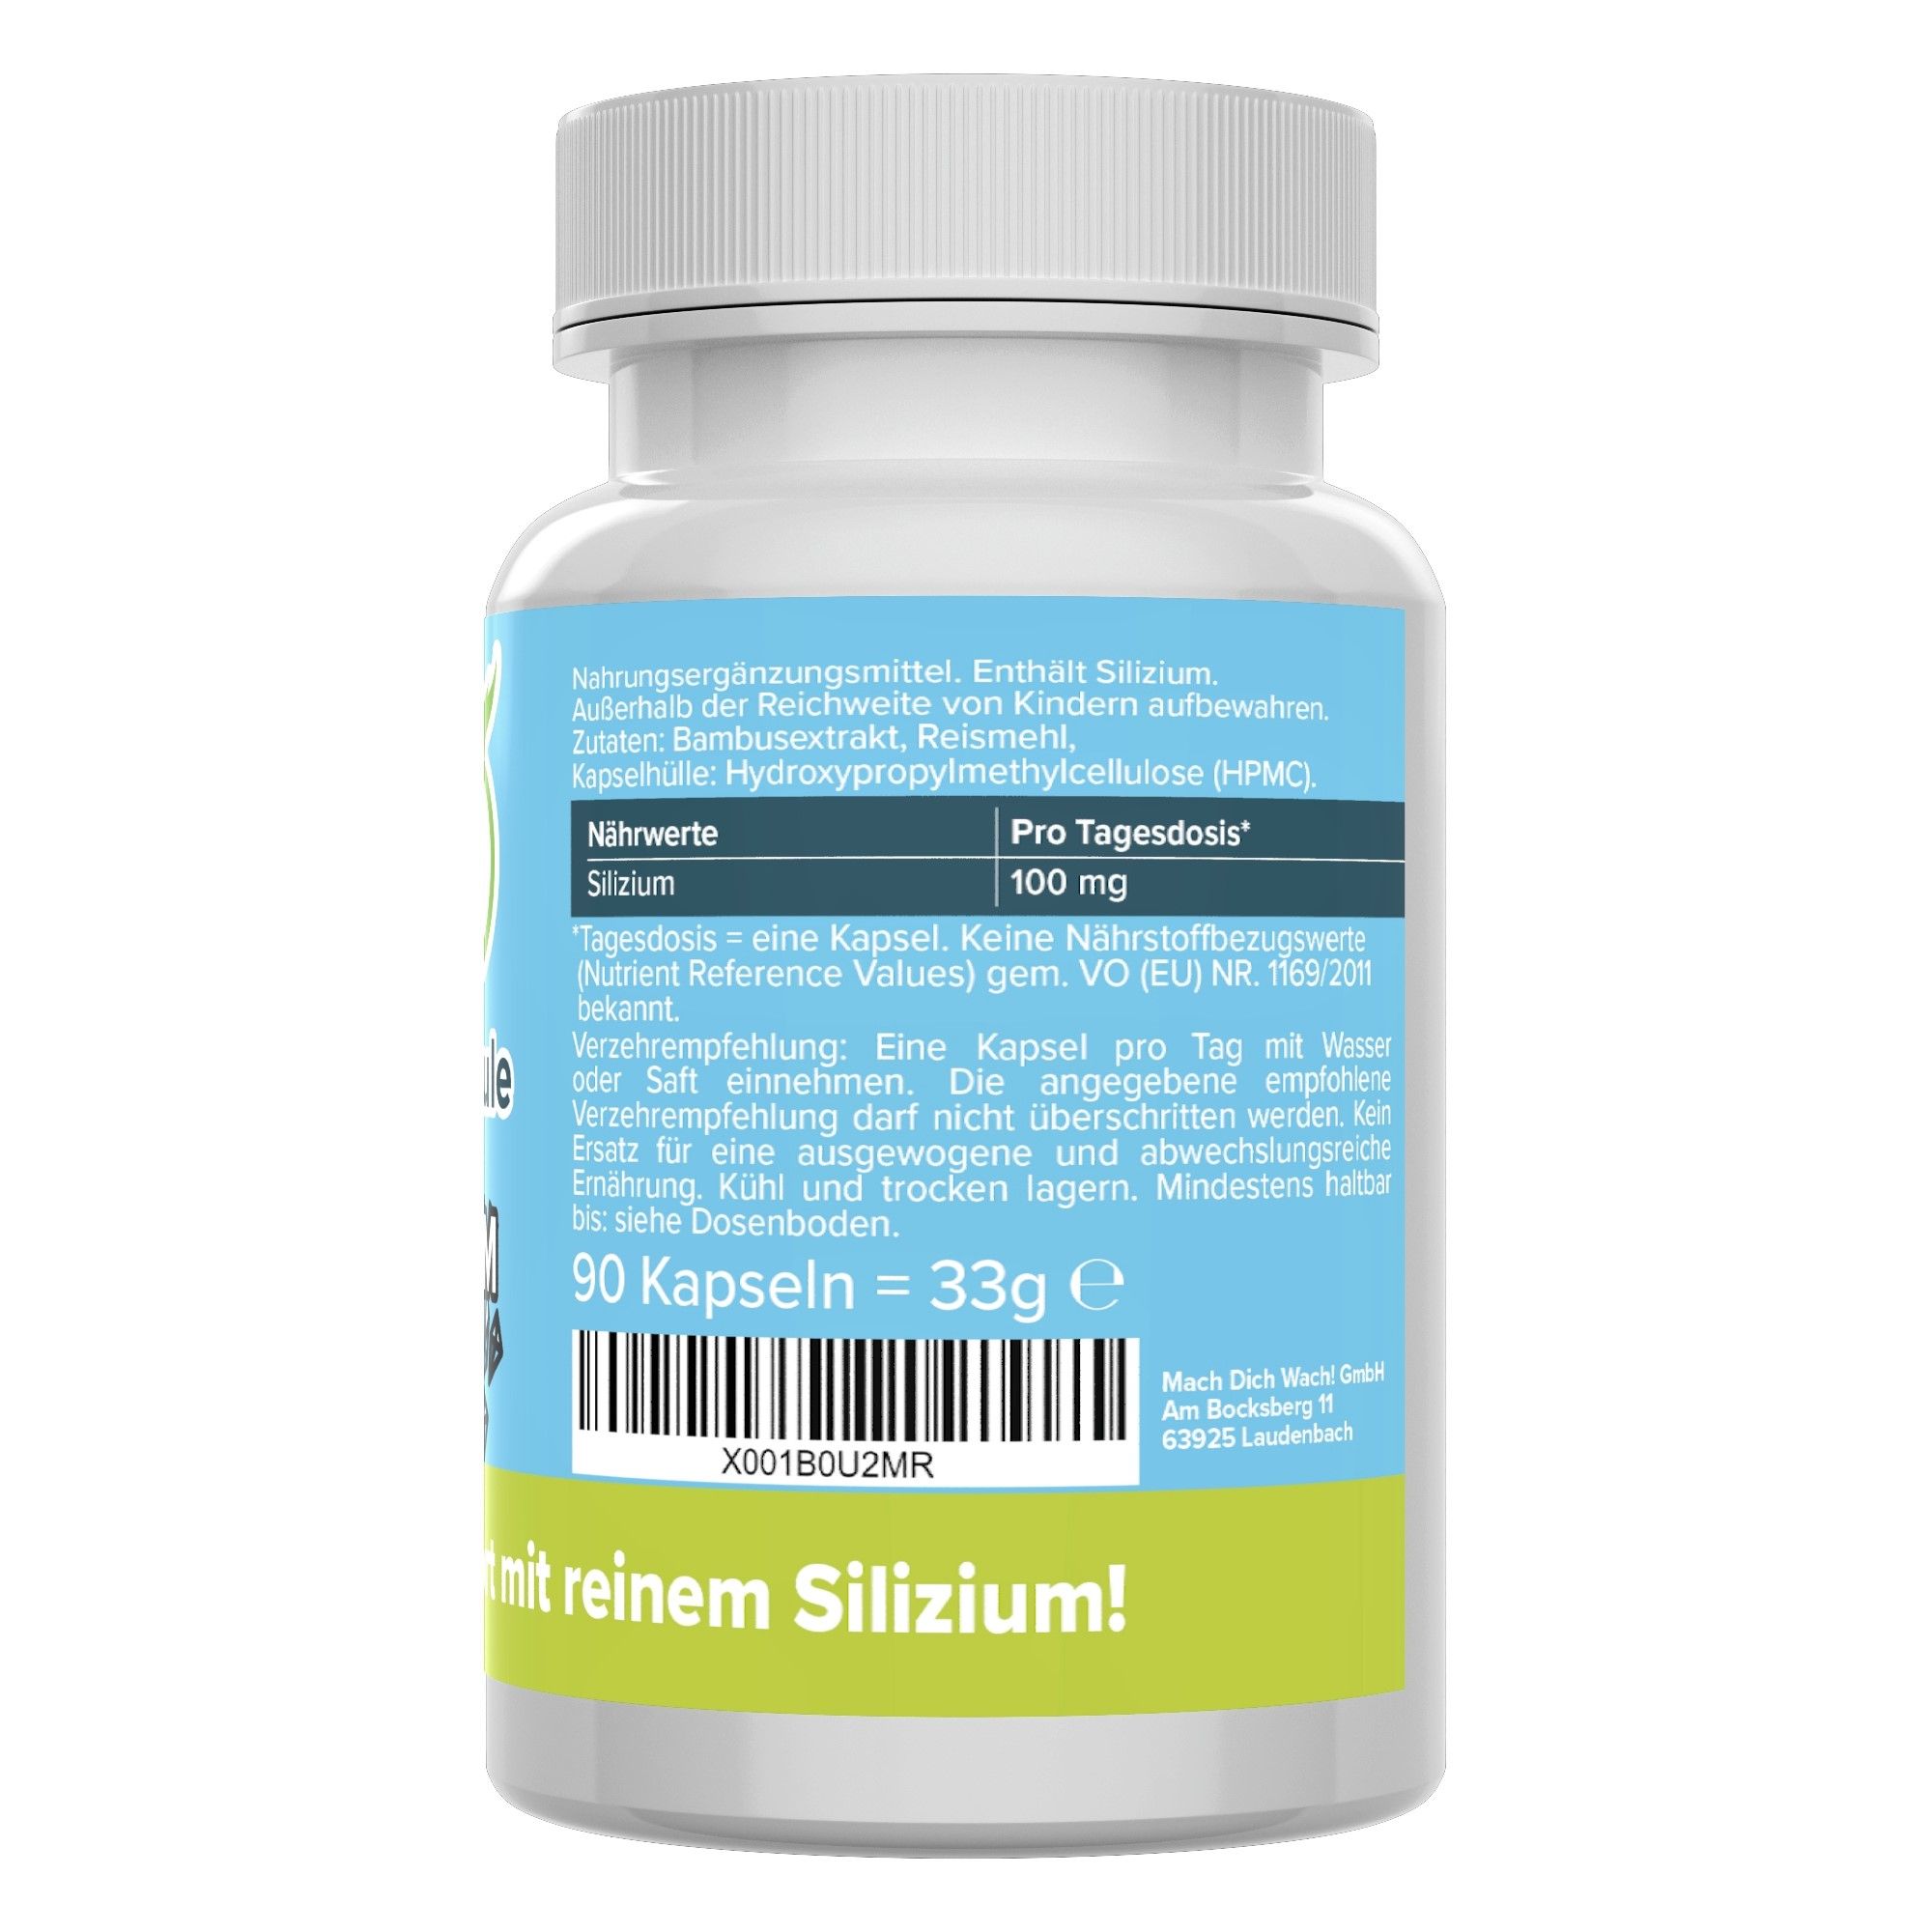 Silizium Kapseln - Vitamineule®